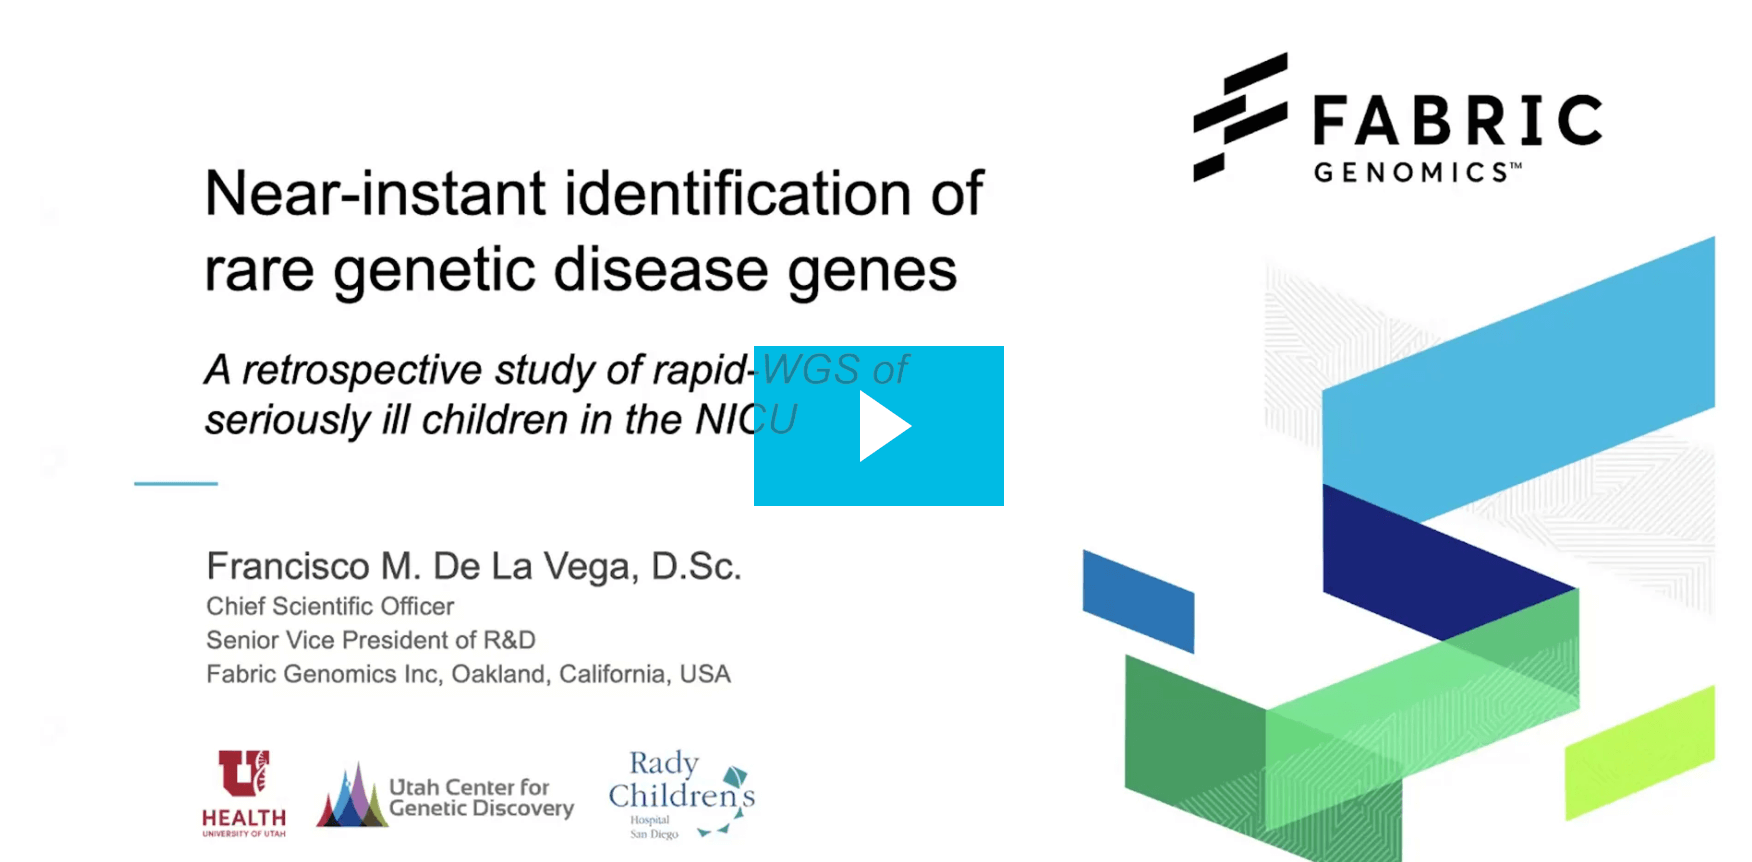 Near-instant identification of rare genetic disease genes